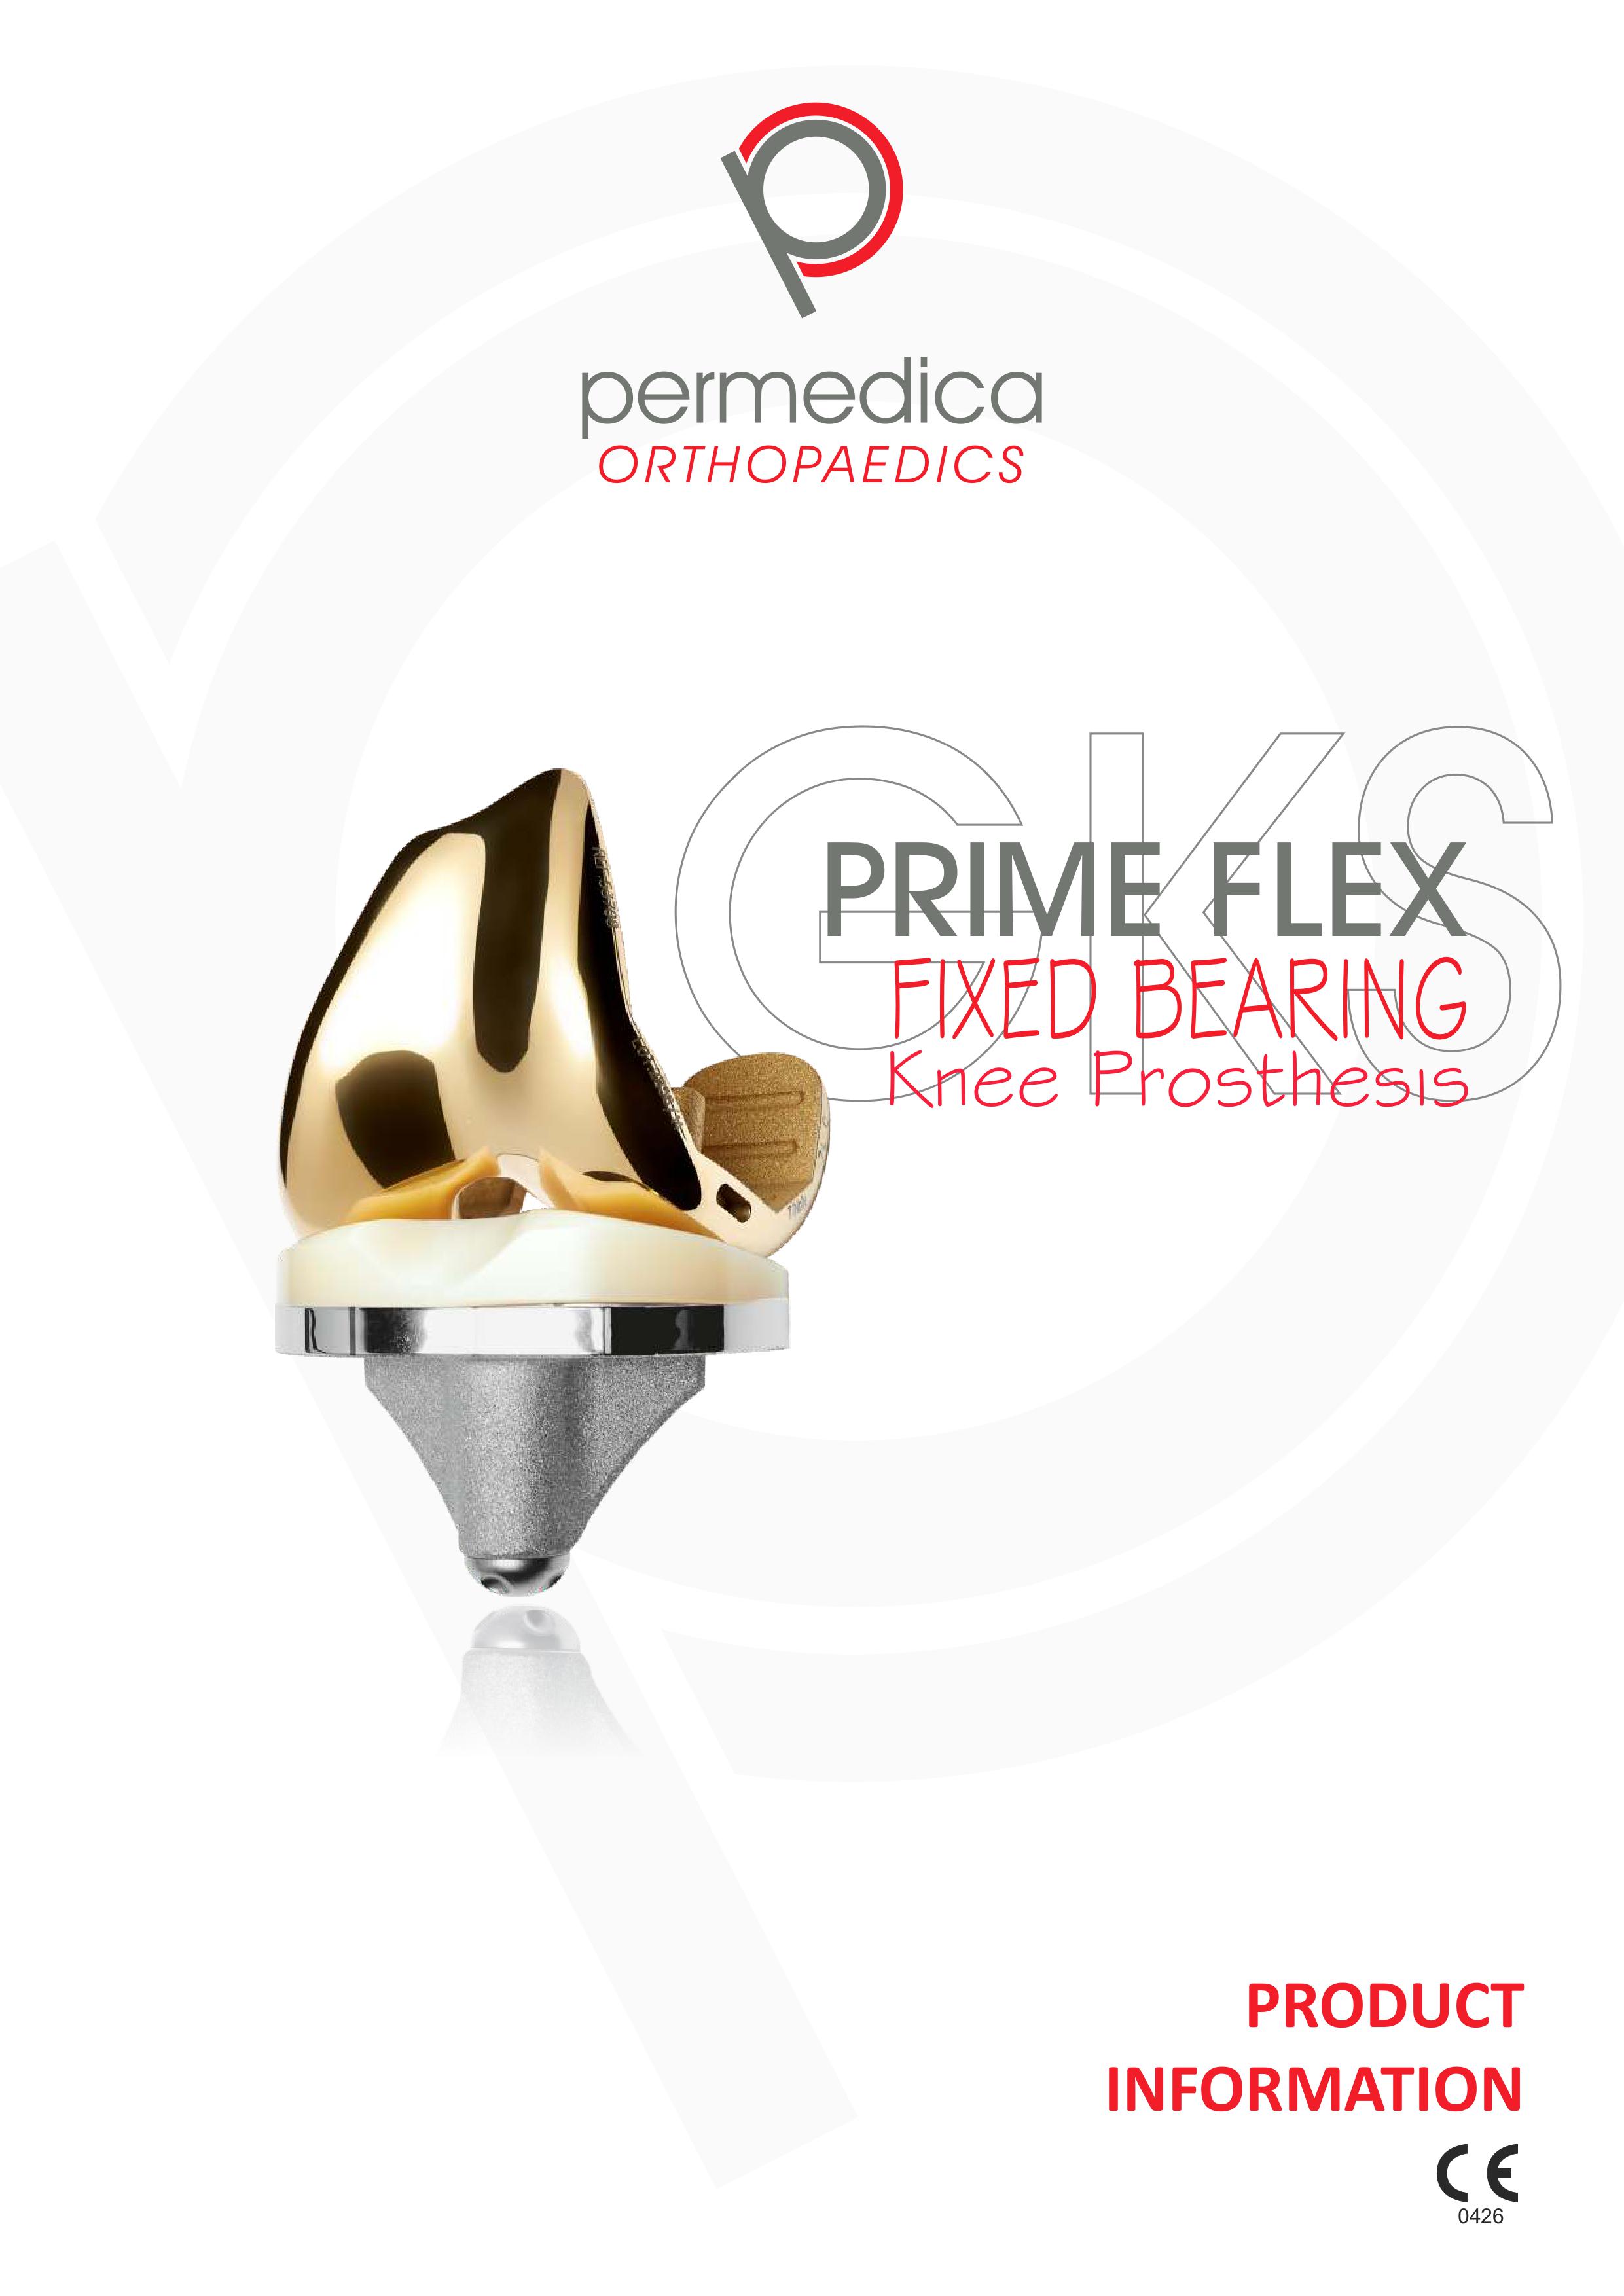 GSK PRIME FLEX Fixed Bearing knee prosthesis